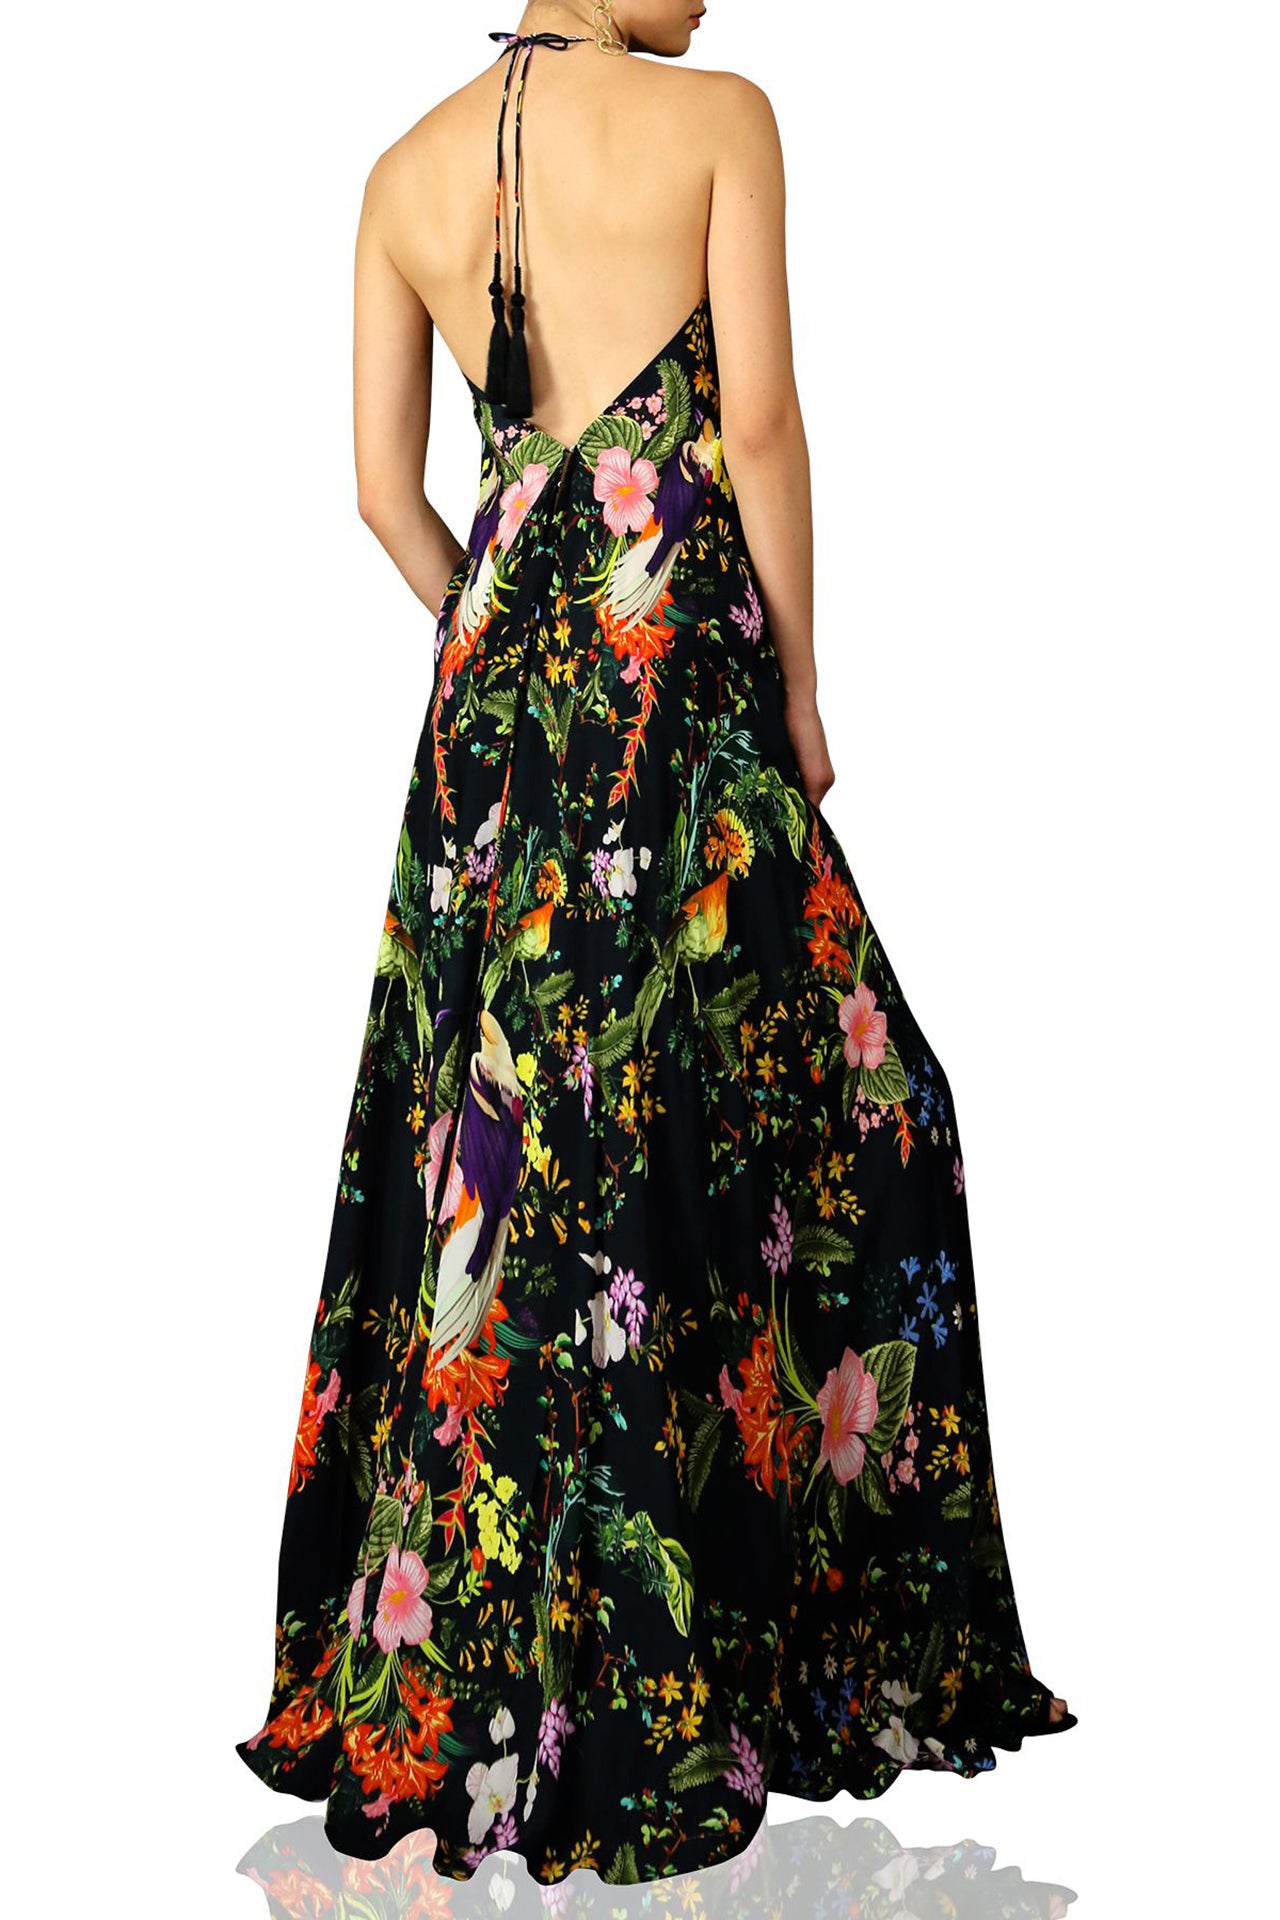 "convertible maxi dress" "Kyle X Shahida" "floral print maxi dress" "long summer dresses for women"